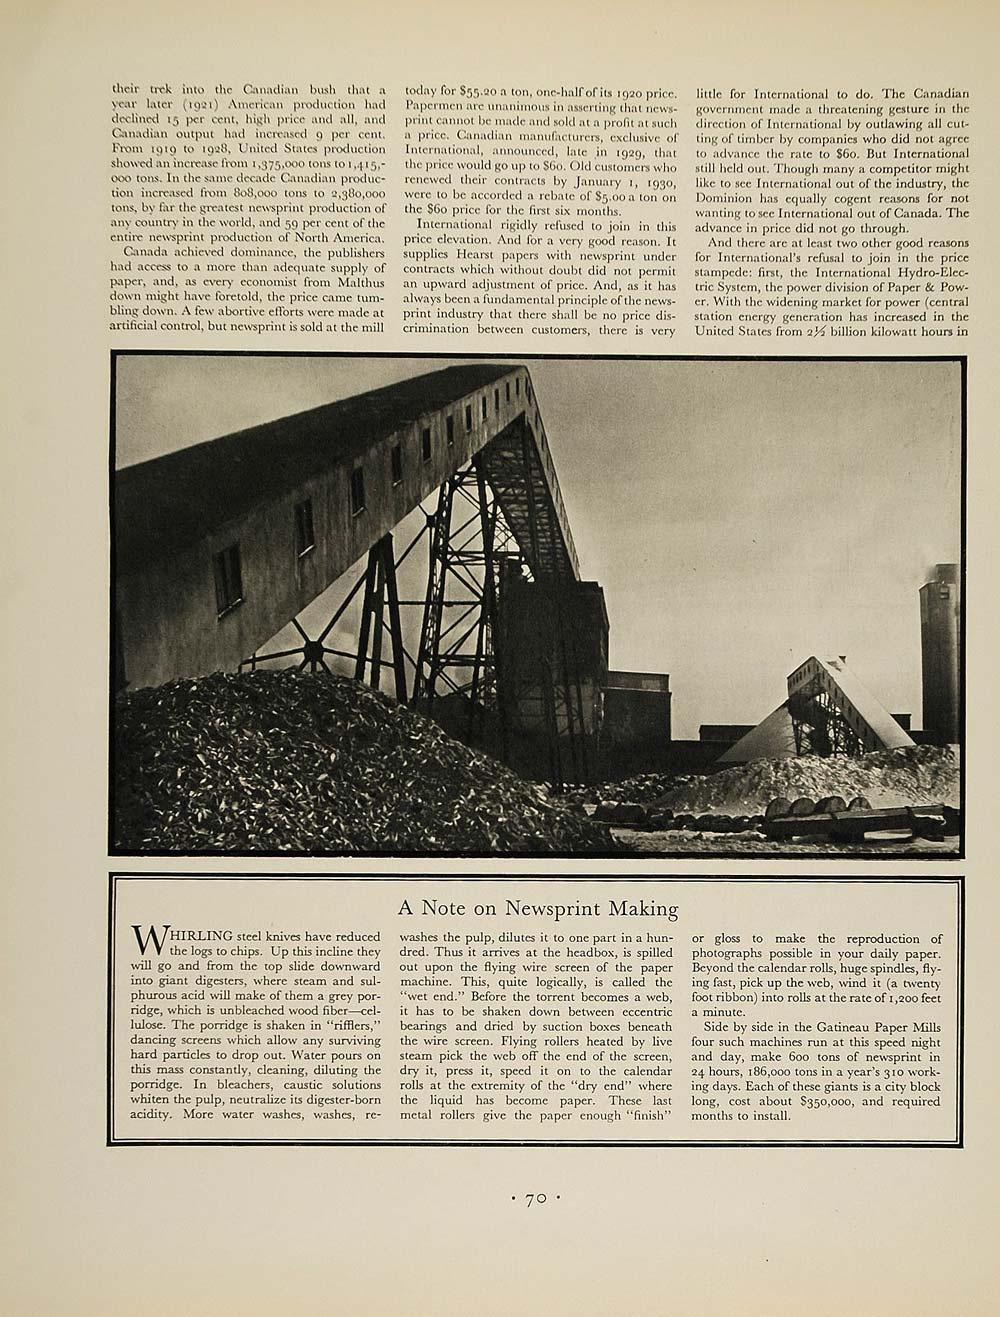 1930 Print Article I.P. & P. Paper Margaret Burke-White - ORIGINAL FT3